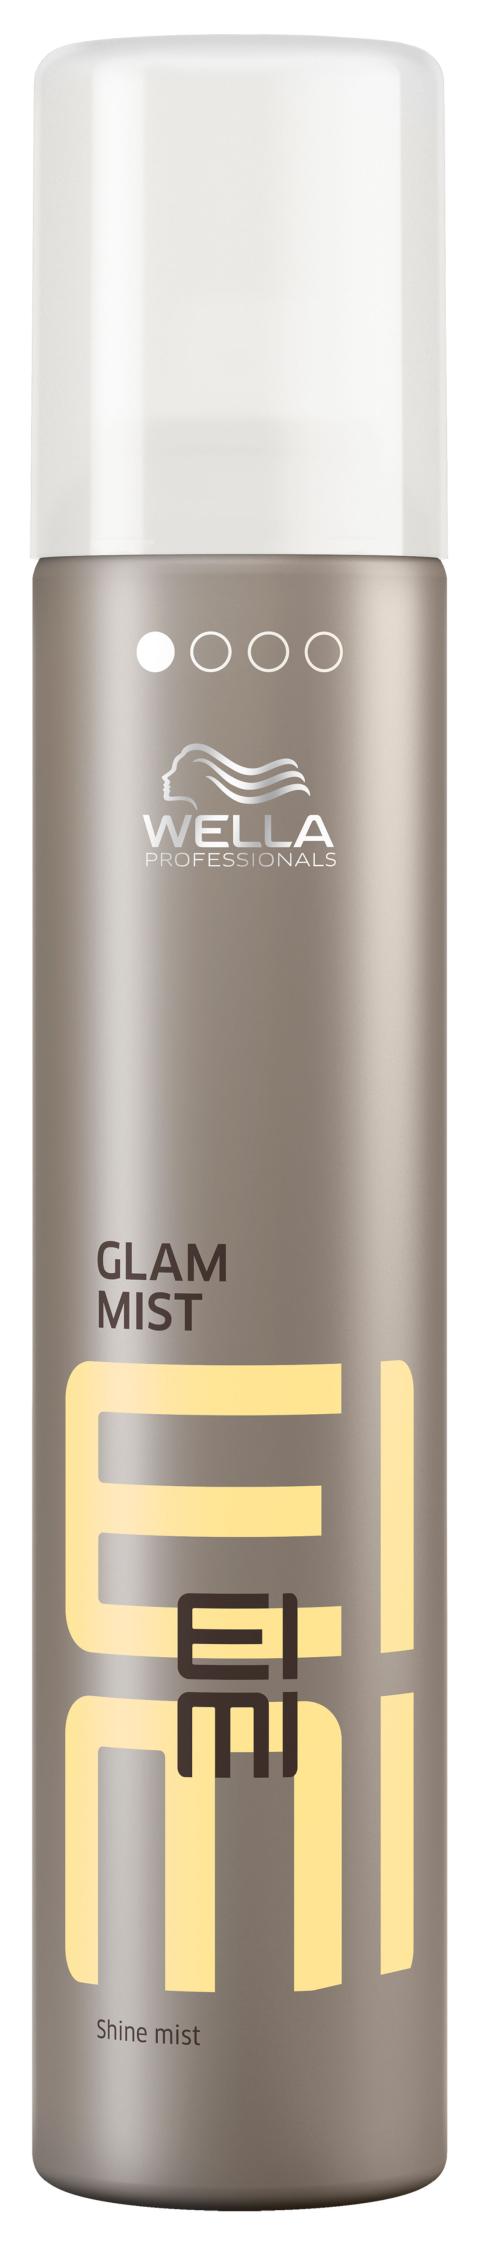 Professionals Styling EIMI Glam Mist Level 1